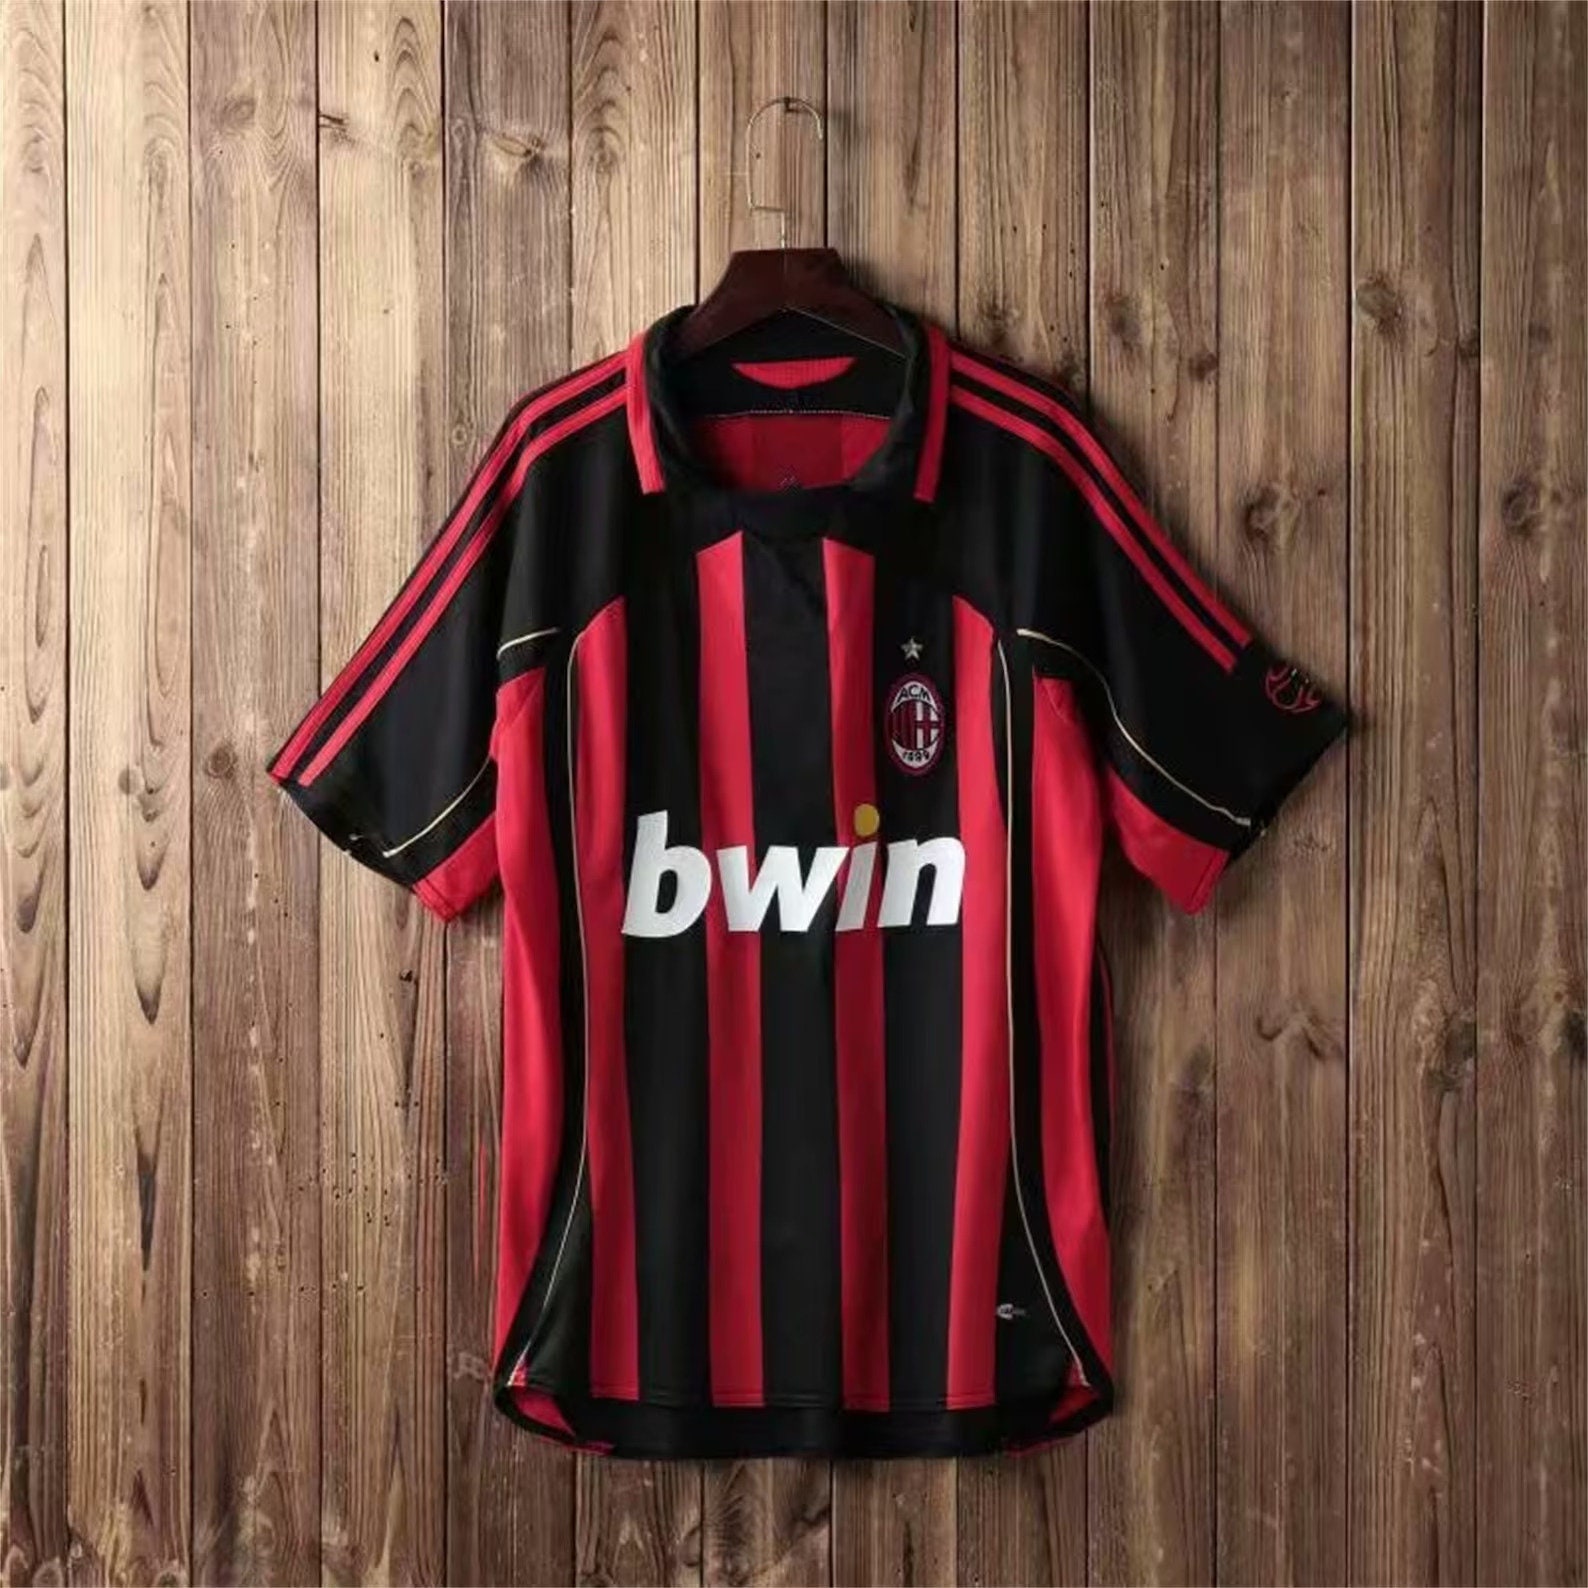 AC Milan Home football shirt 2006 - 2007. Sponsored by Bwin